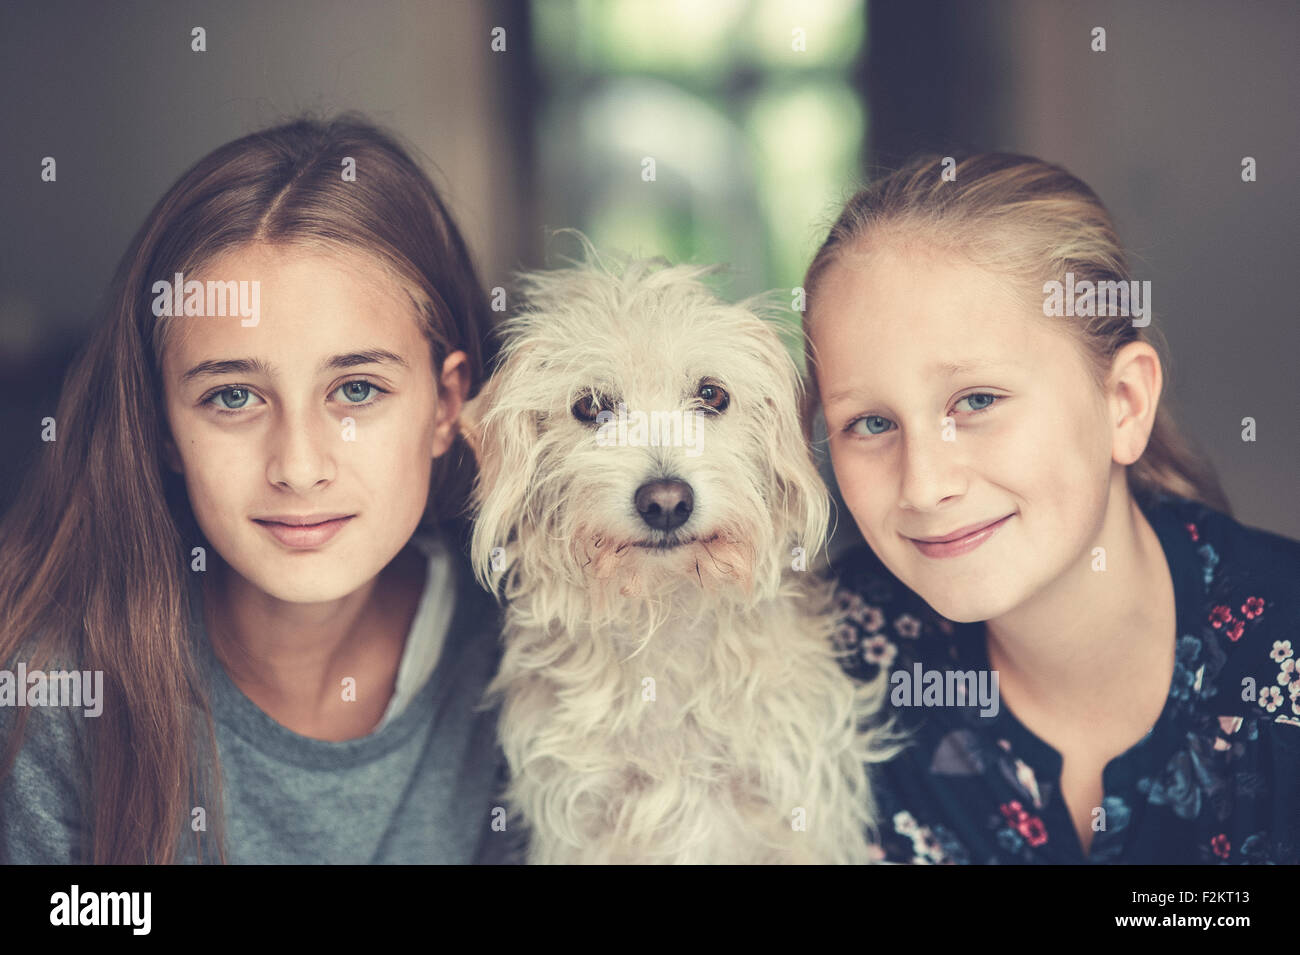 Girls with dog Stock Photo